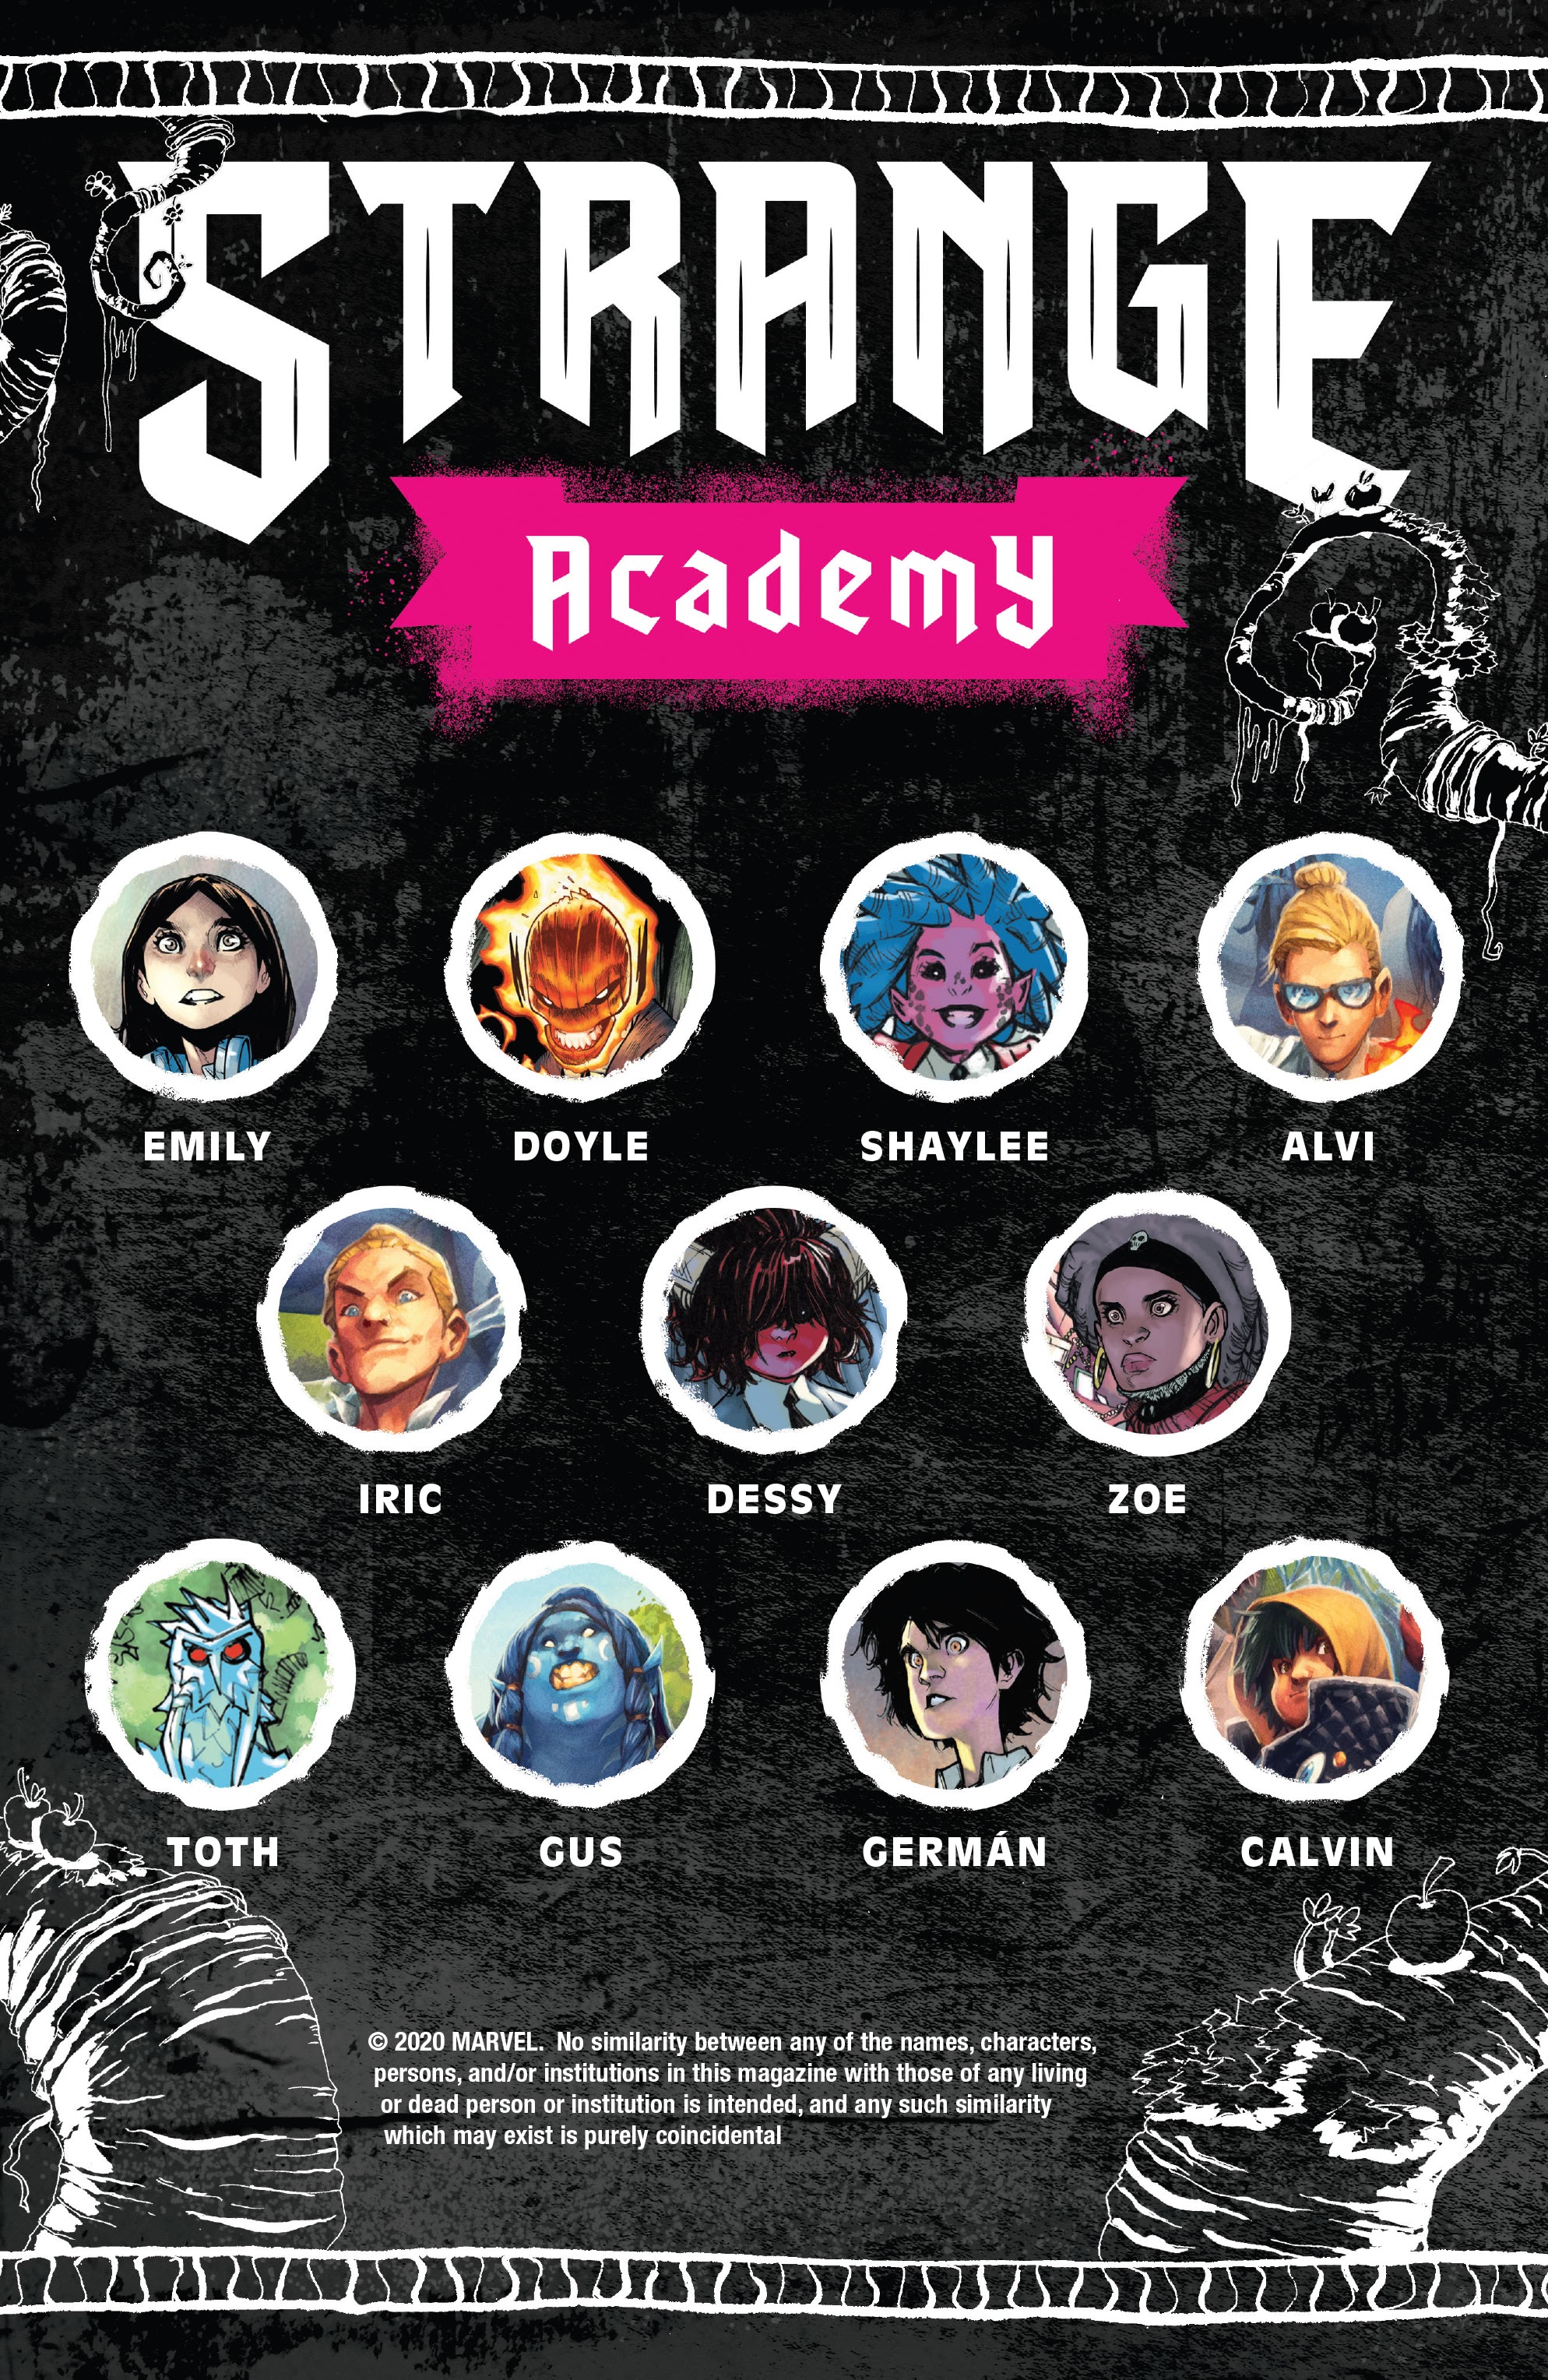 Read online Strange Academy comic -  Issue #3 - 4